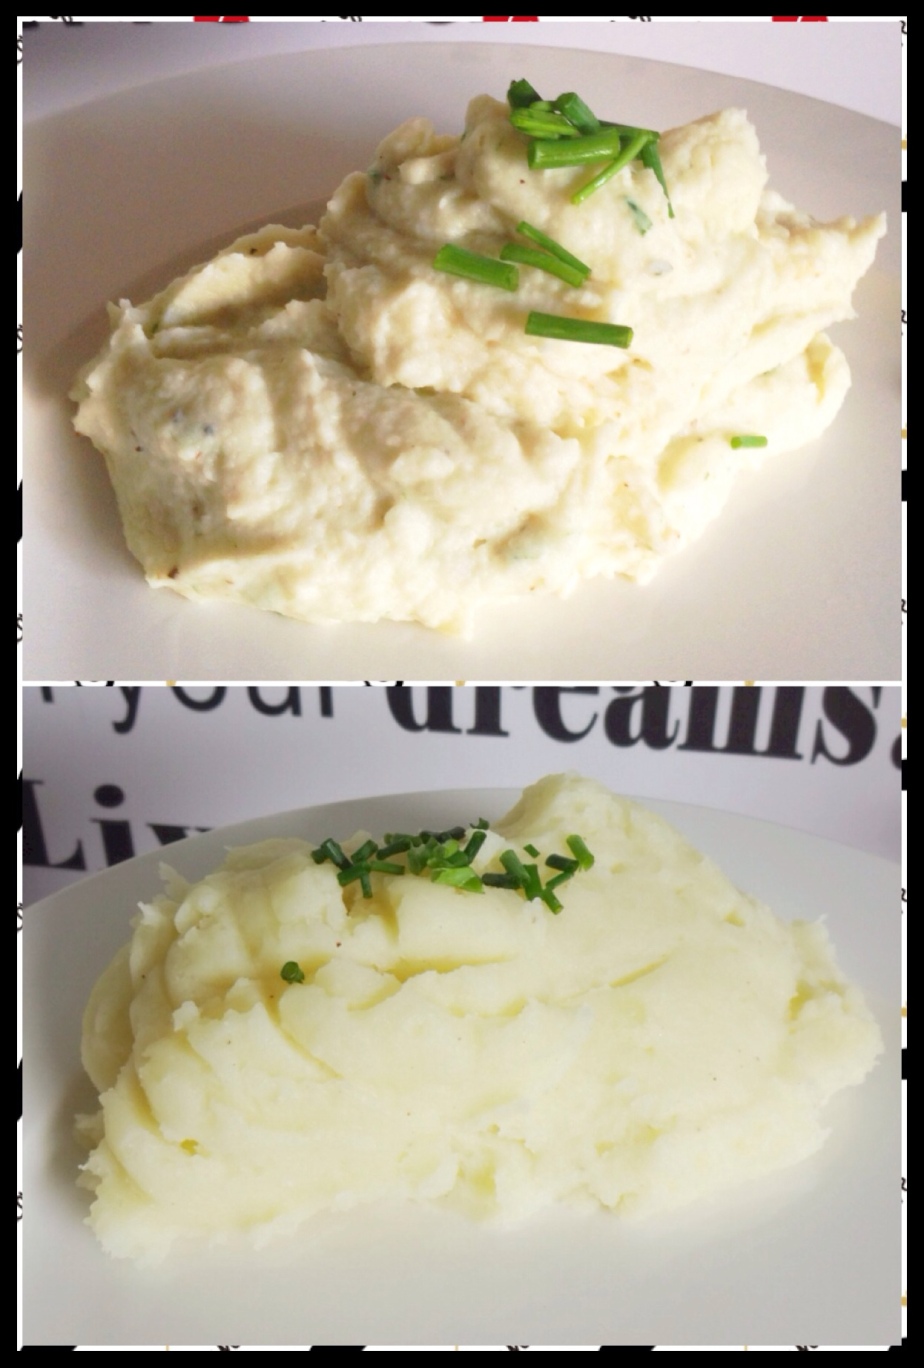 Full Fat vs Full Fit: Mashed Potatoes